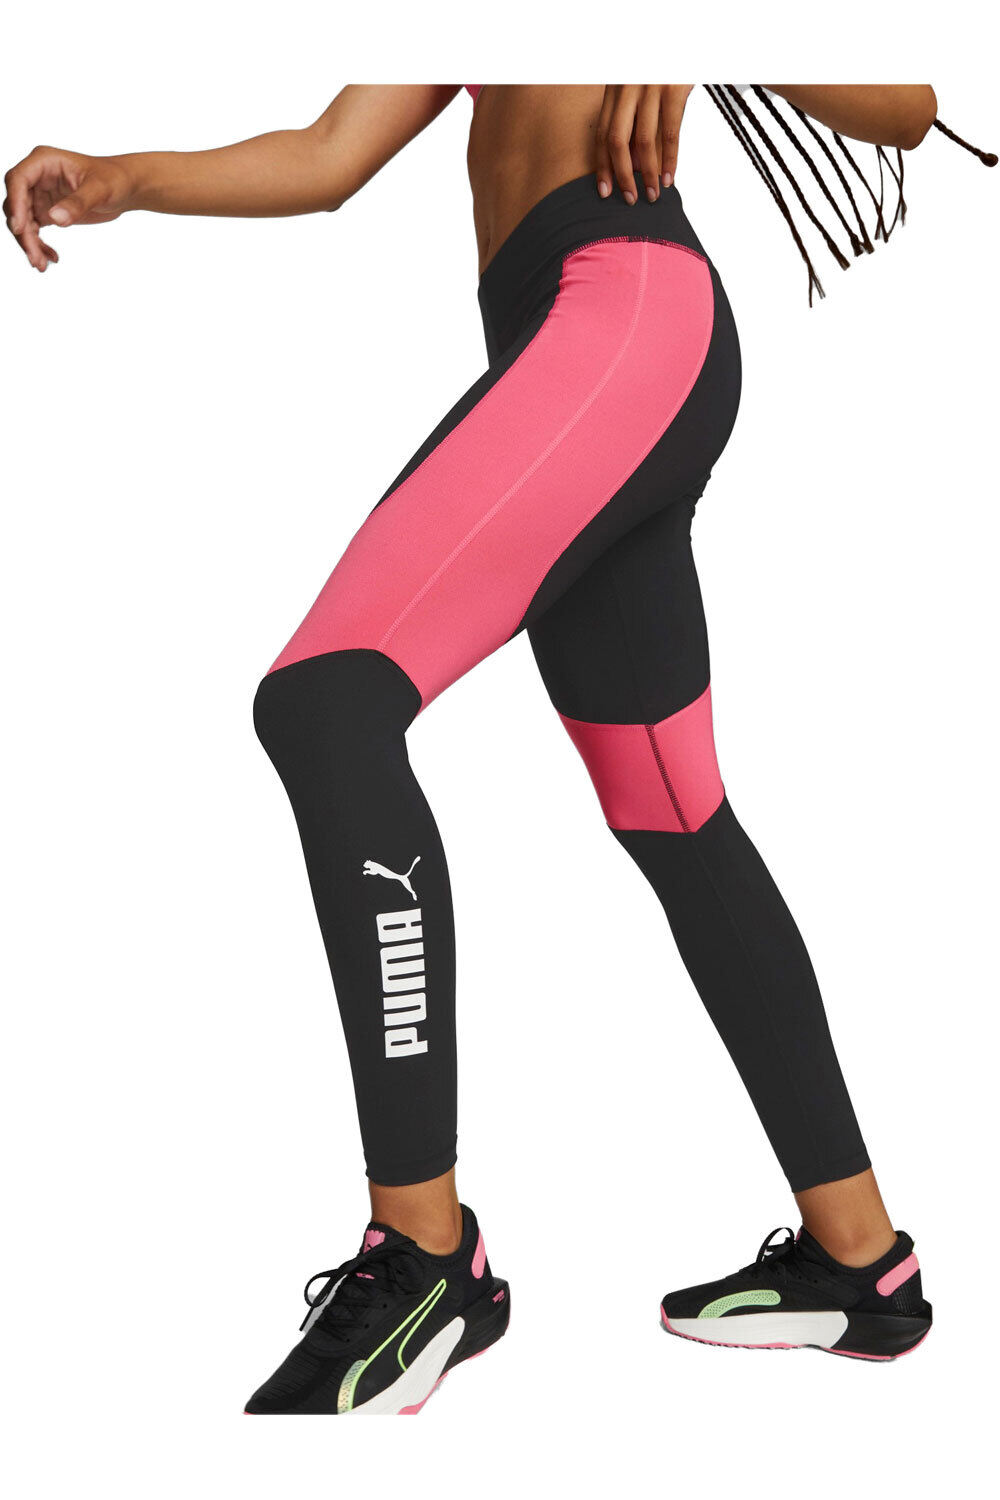 Puma pantalones y mallas largas fitness mujer Train Favorite Logo vista frontal